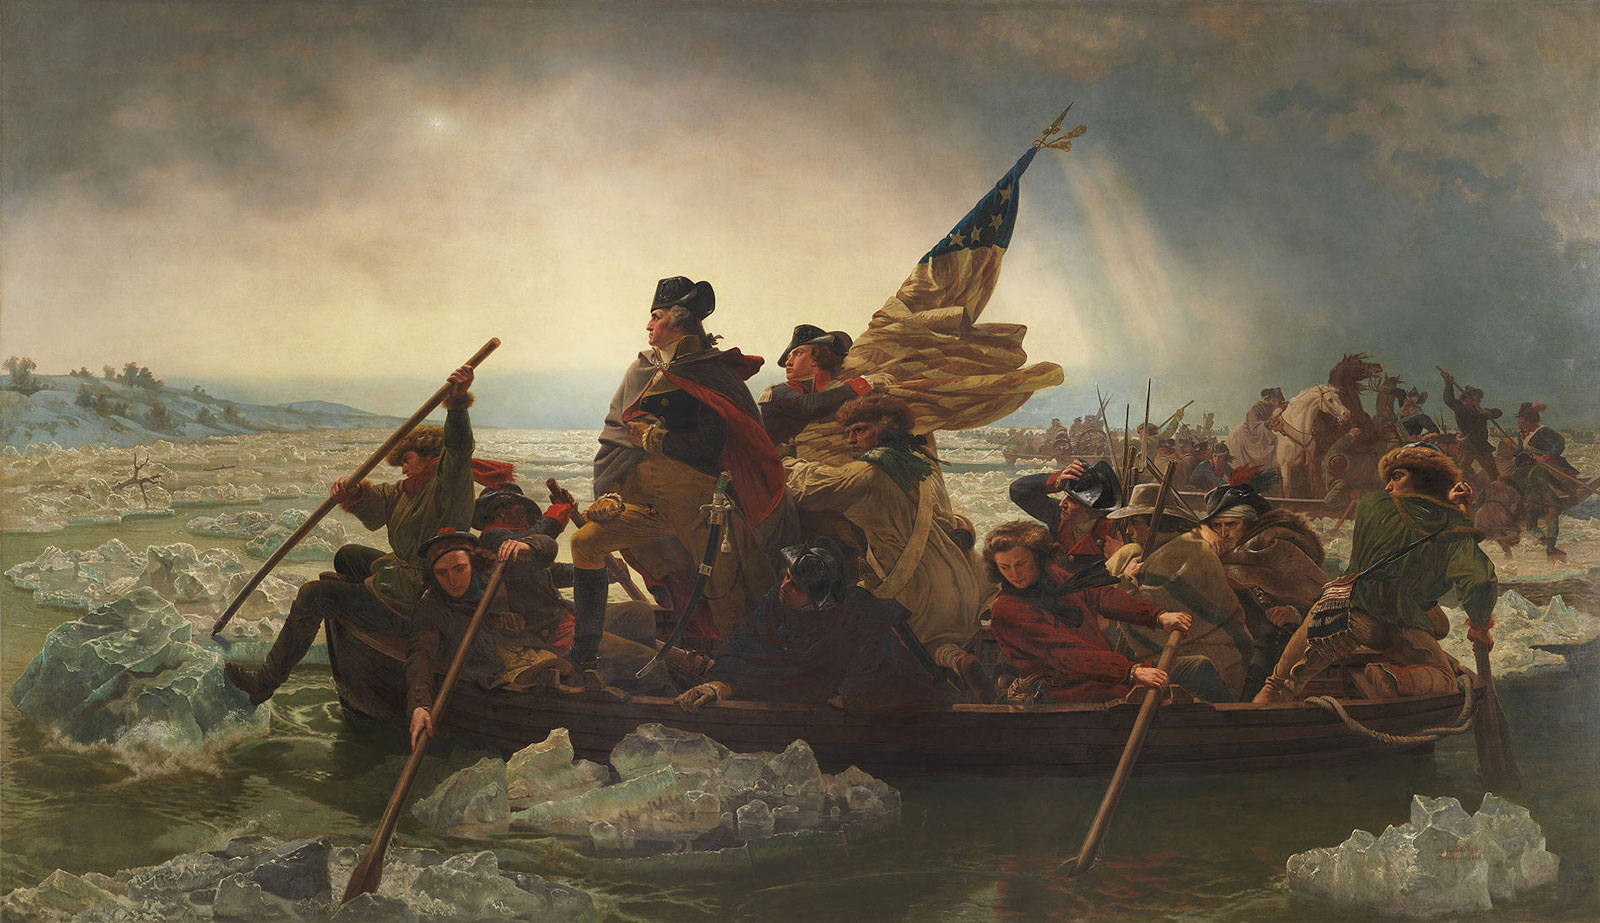 Washington Crossing The Delaware, by Emanuel Gottlieb Leutze